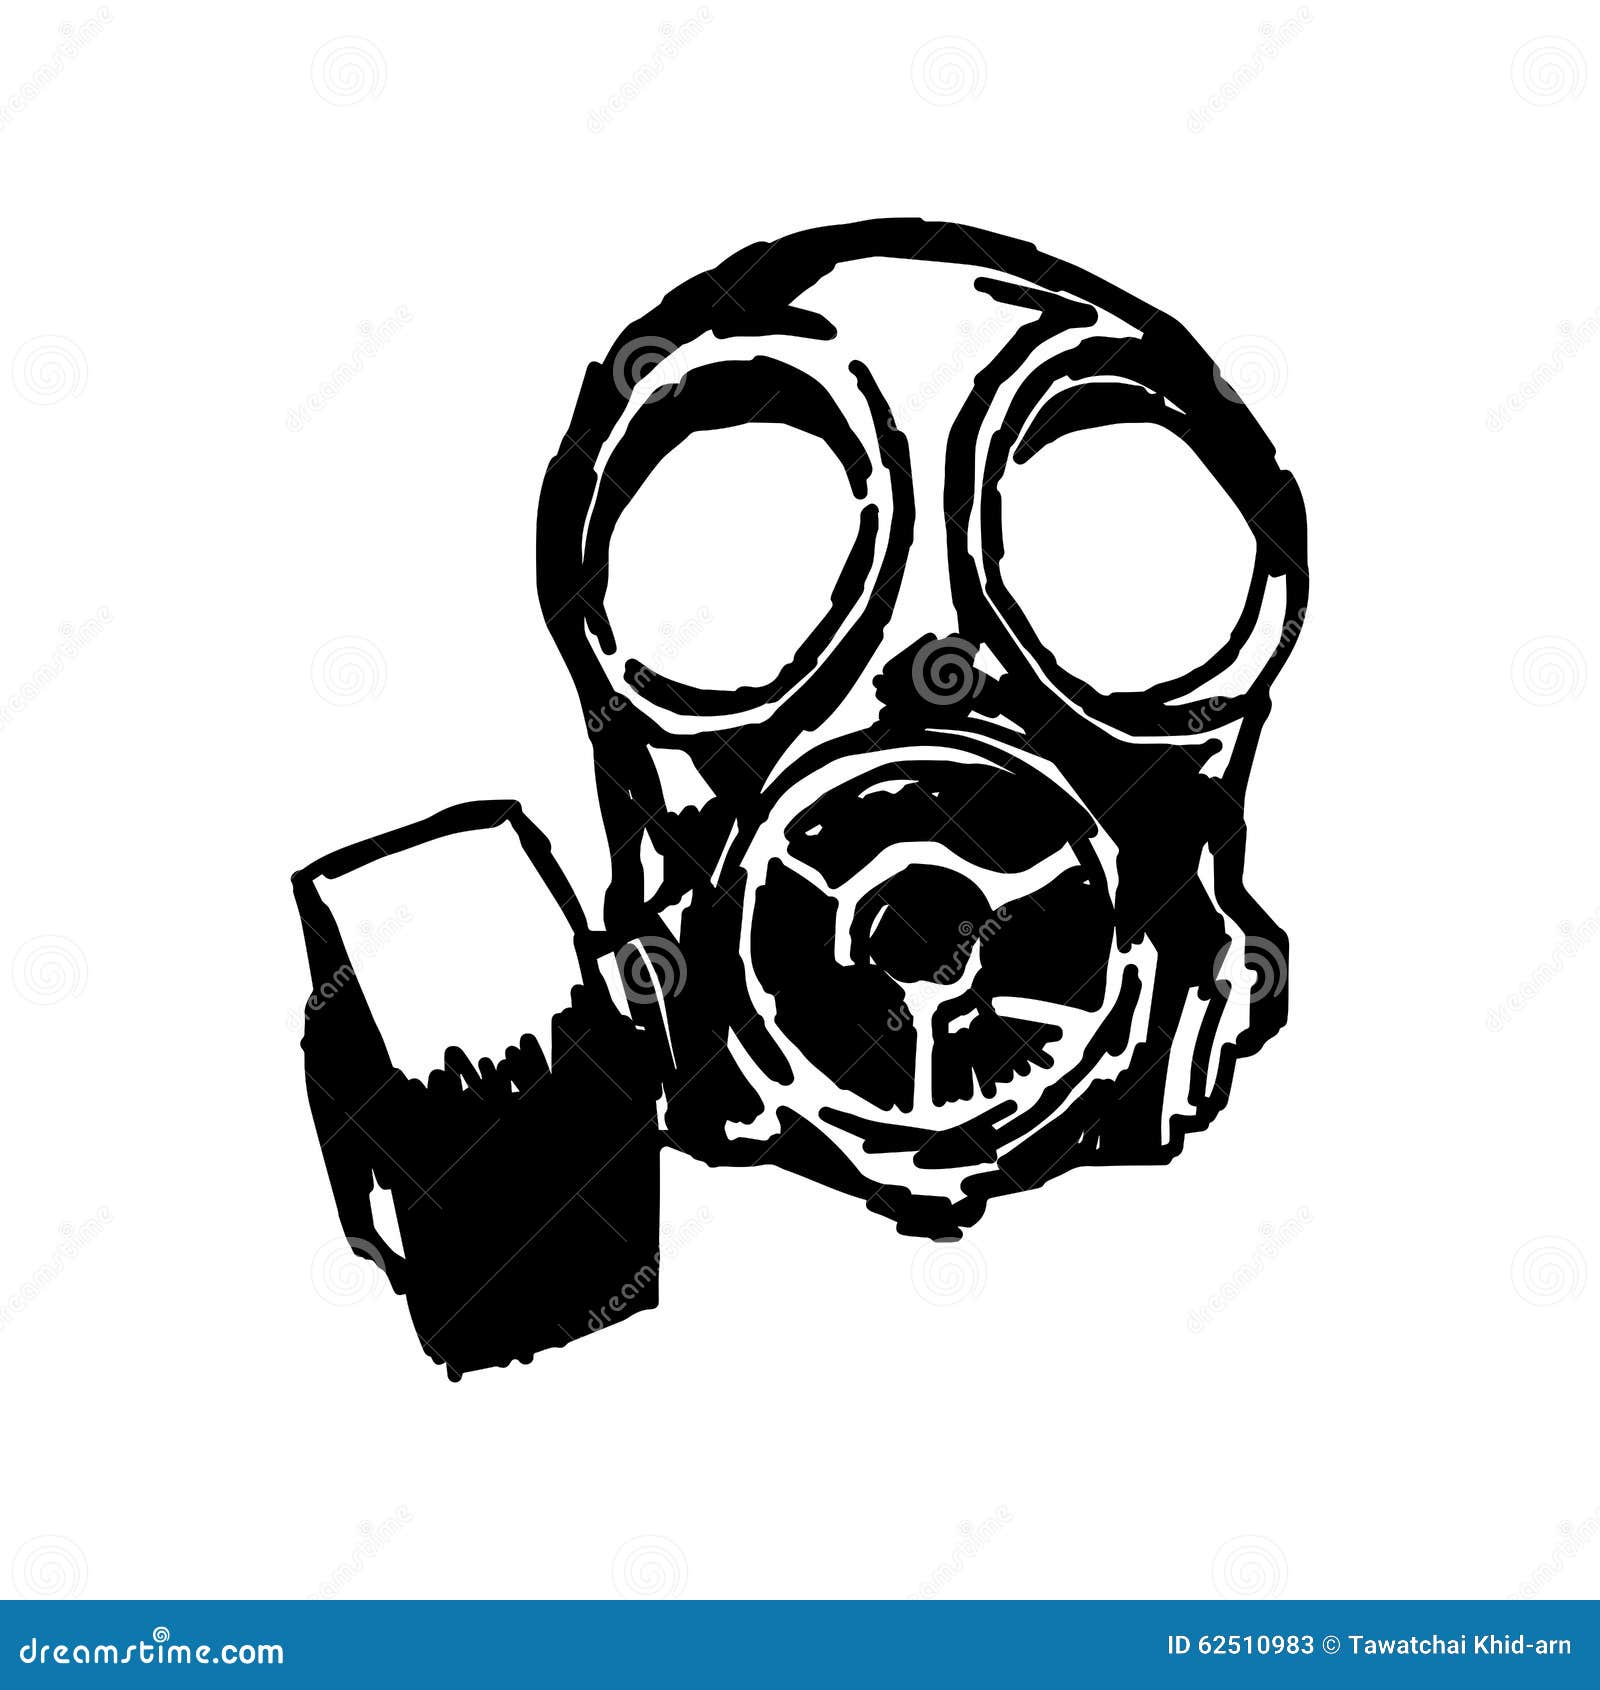 979 Gas Mask Sketch Images Stock Photos  Vectors  Shutterstock